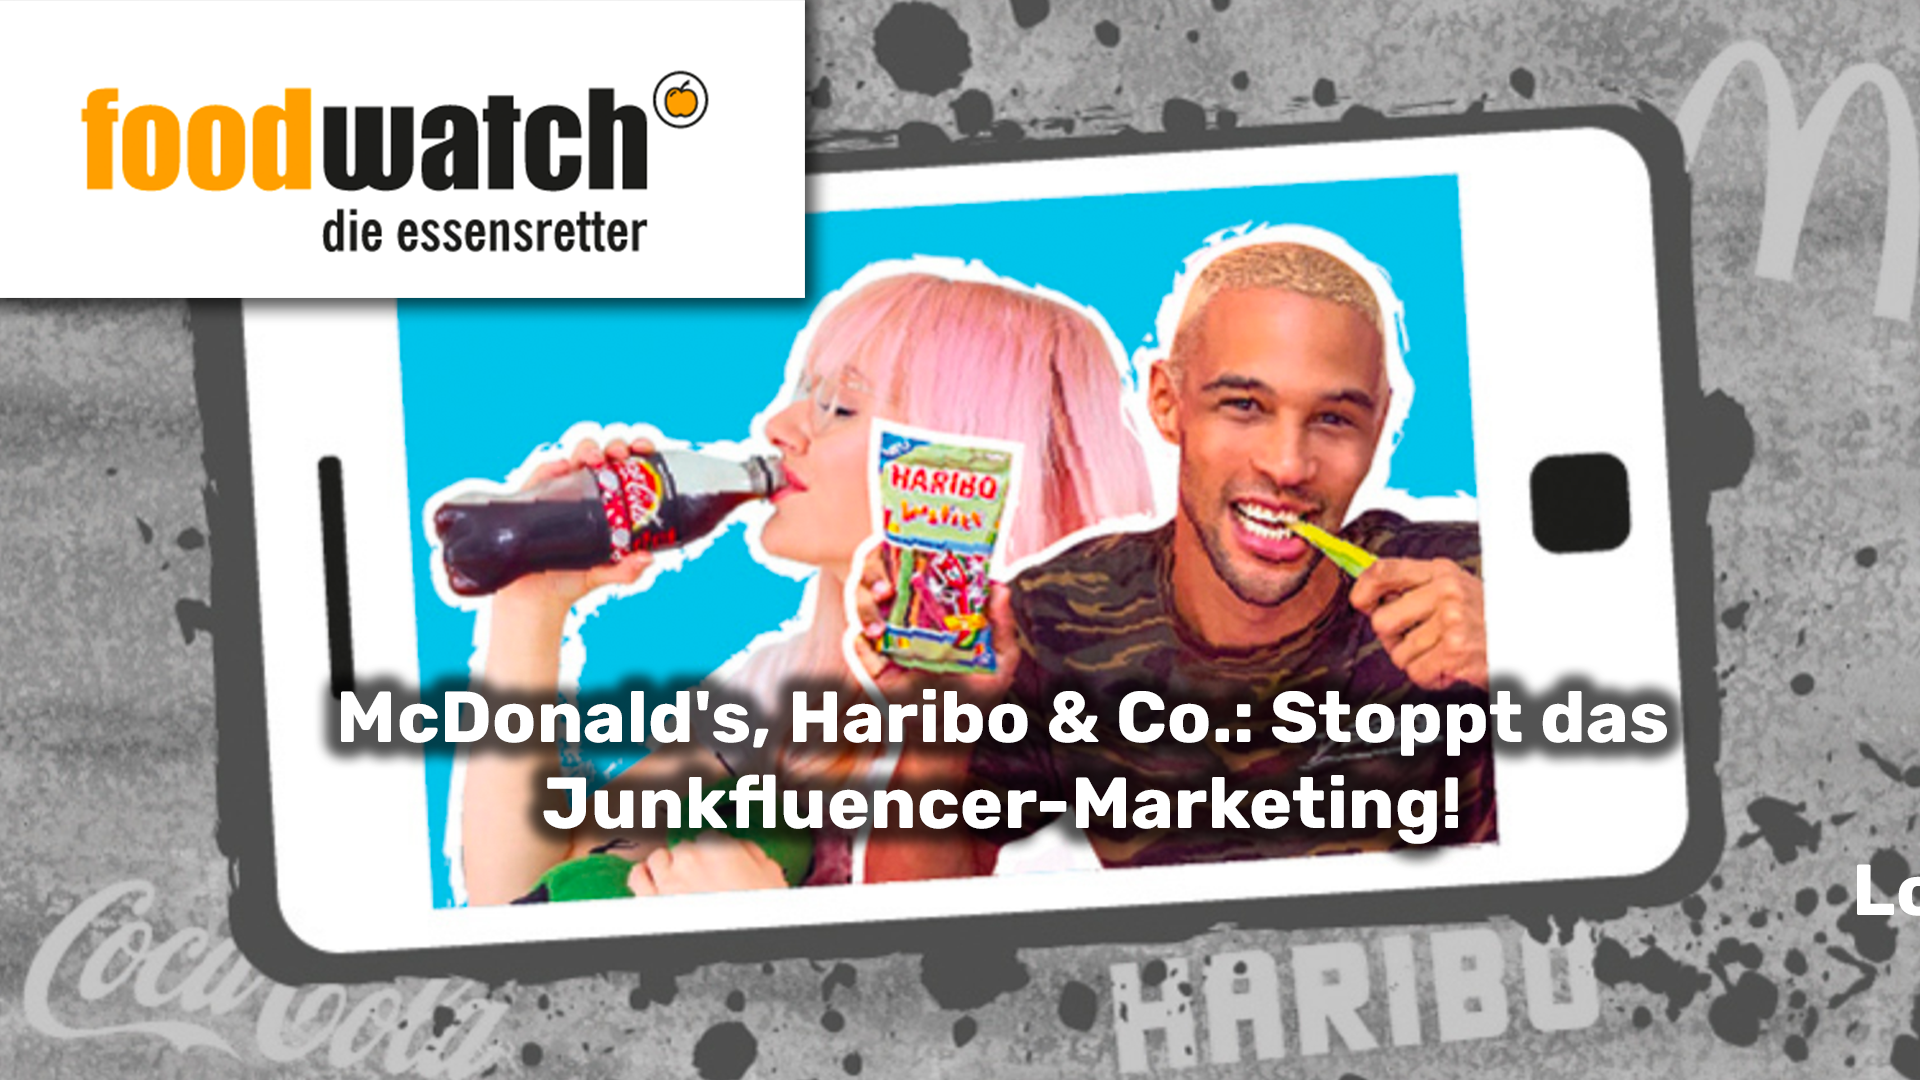 McDonald’s, Haribo & Co.: Stoppt das Junkfluencer-Marketing!